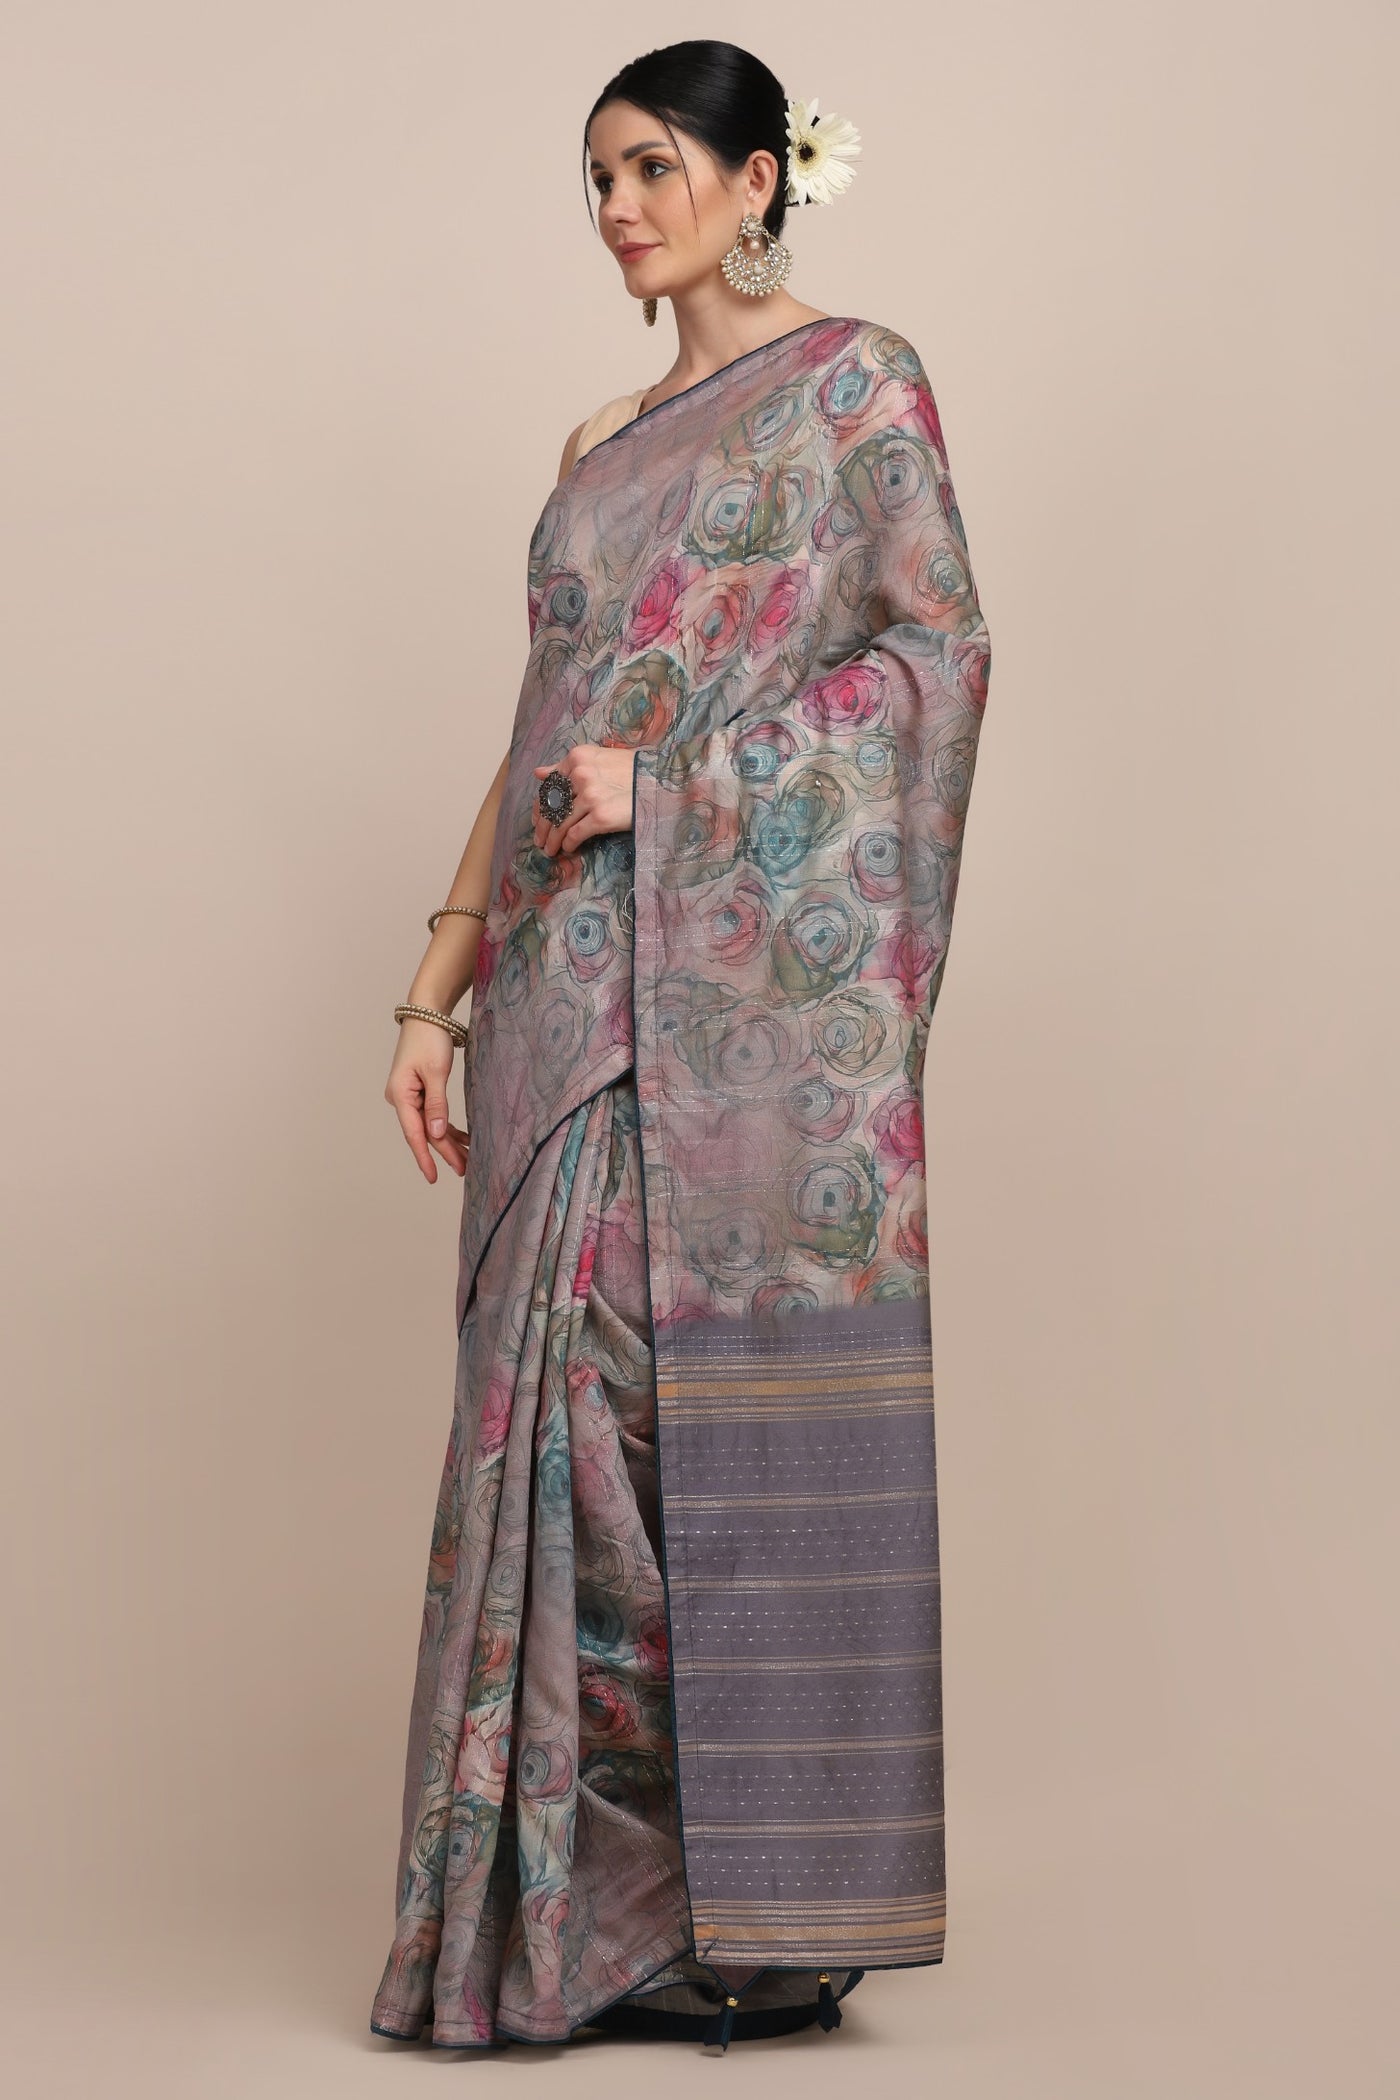 Classy multi color floral motif printed saree